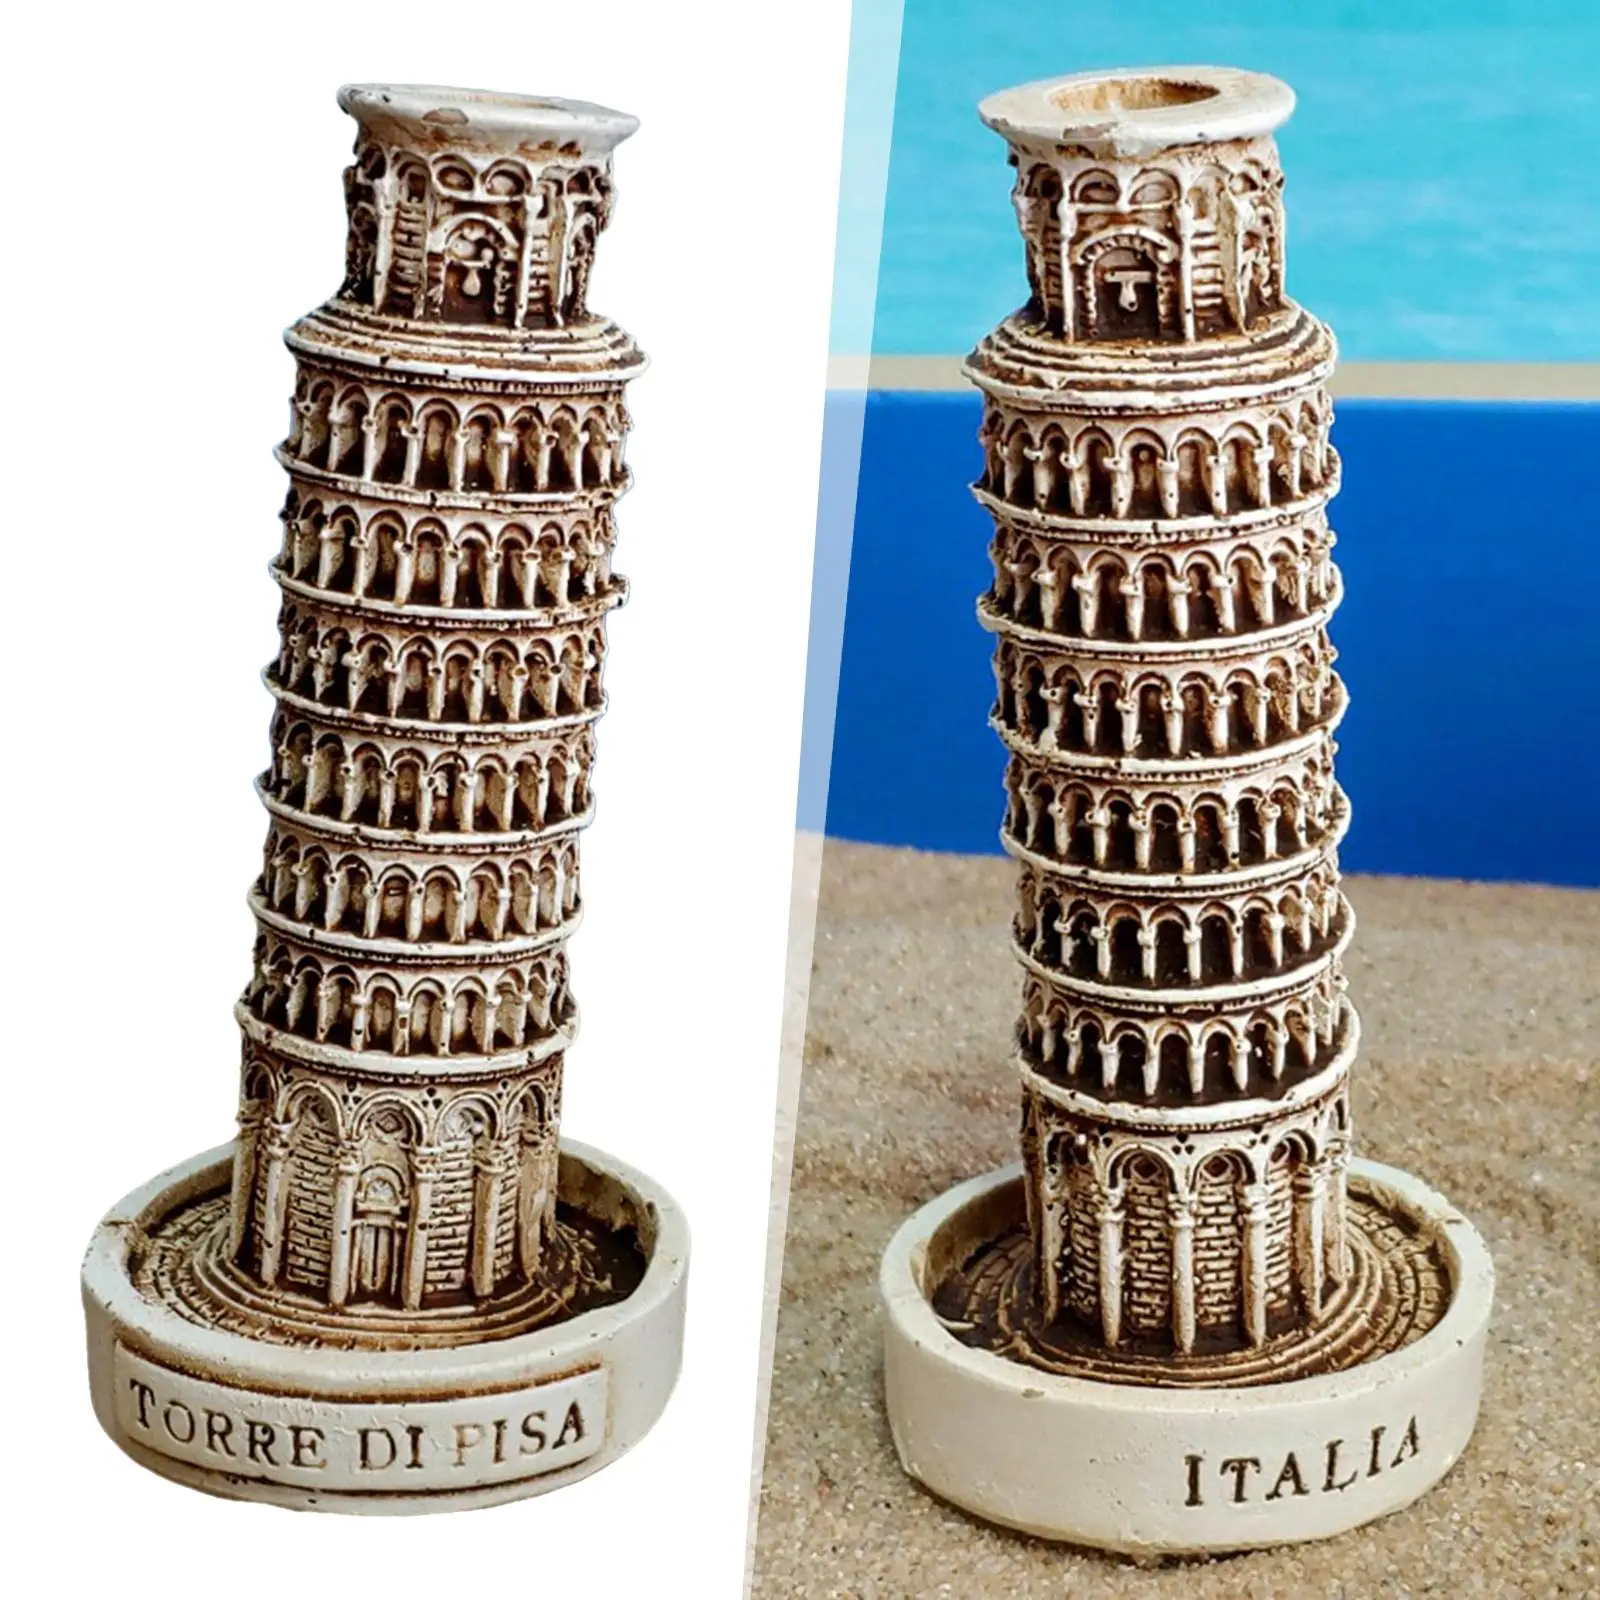 Tower of Pisa Pisa Piazza Miniature Antique Statue Model Home Ornament